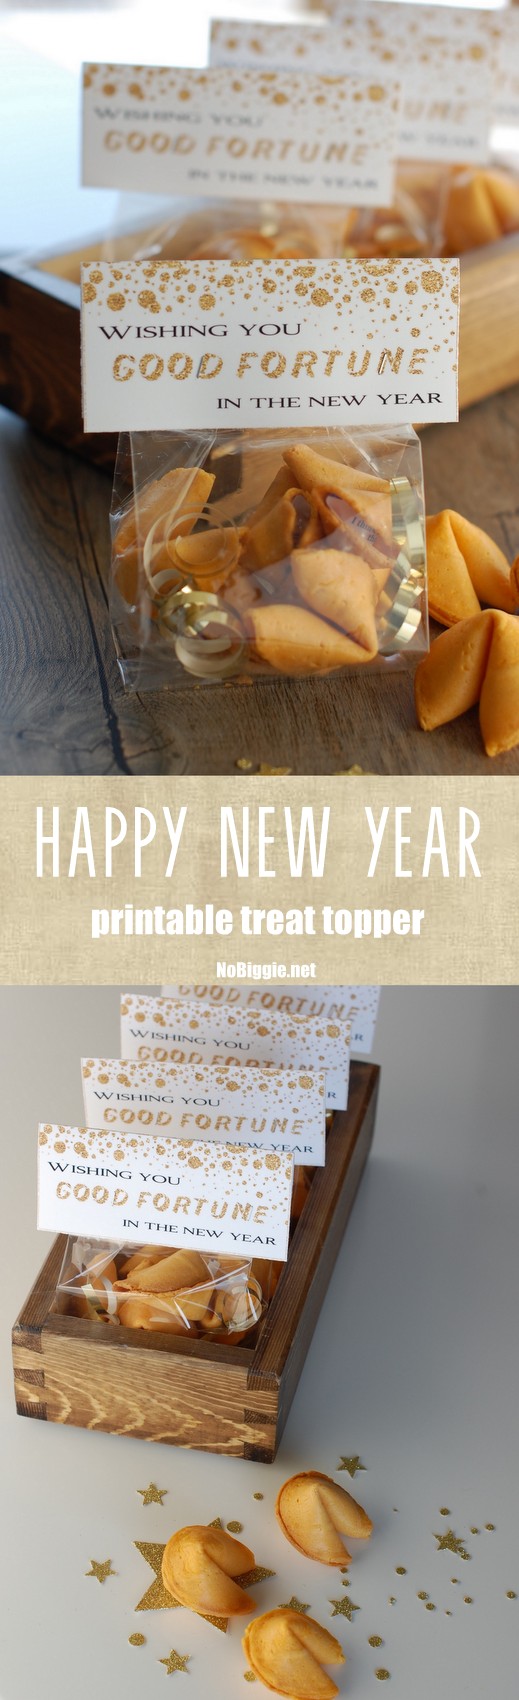 Happy New Year printable treat topper | NoBiggie.net